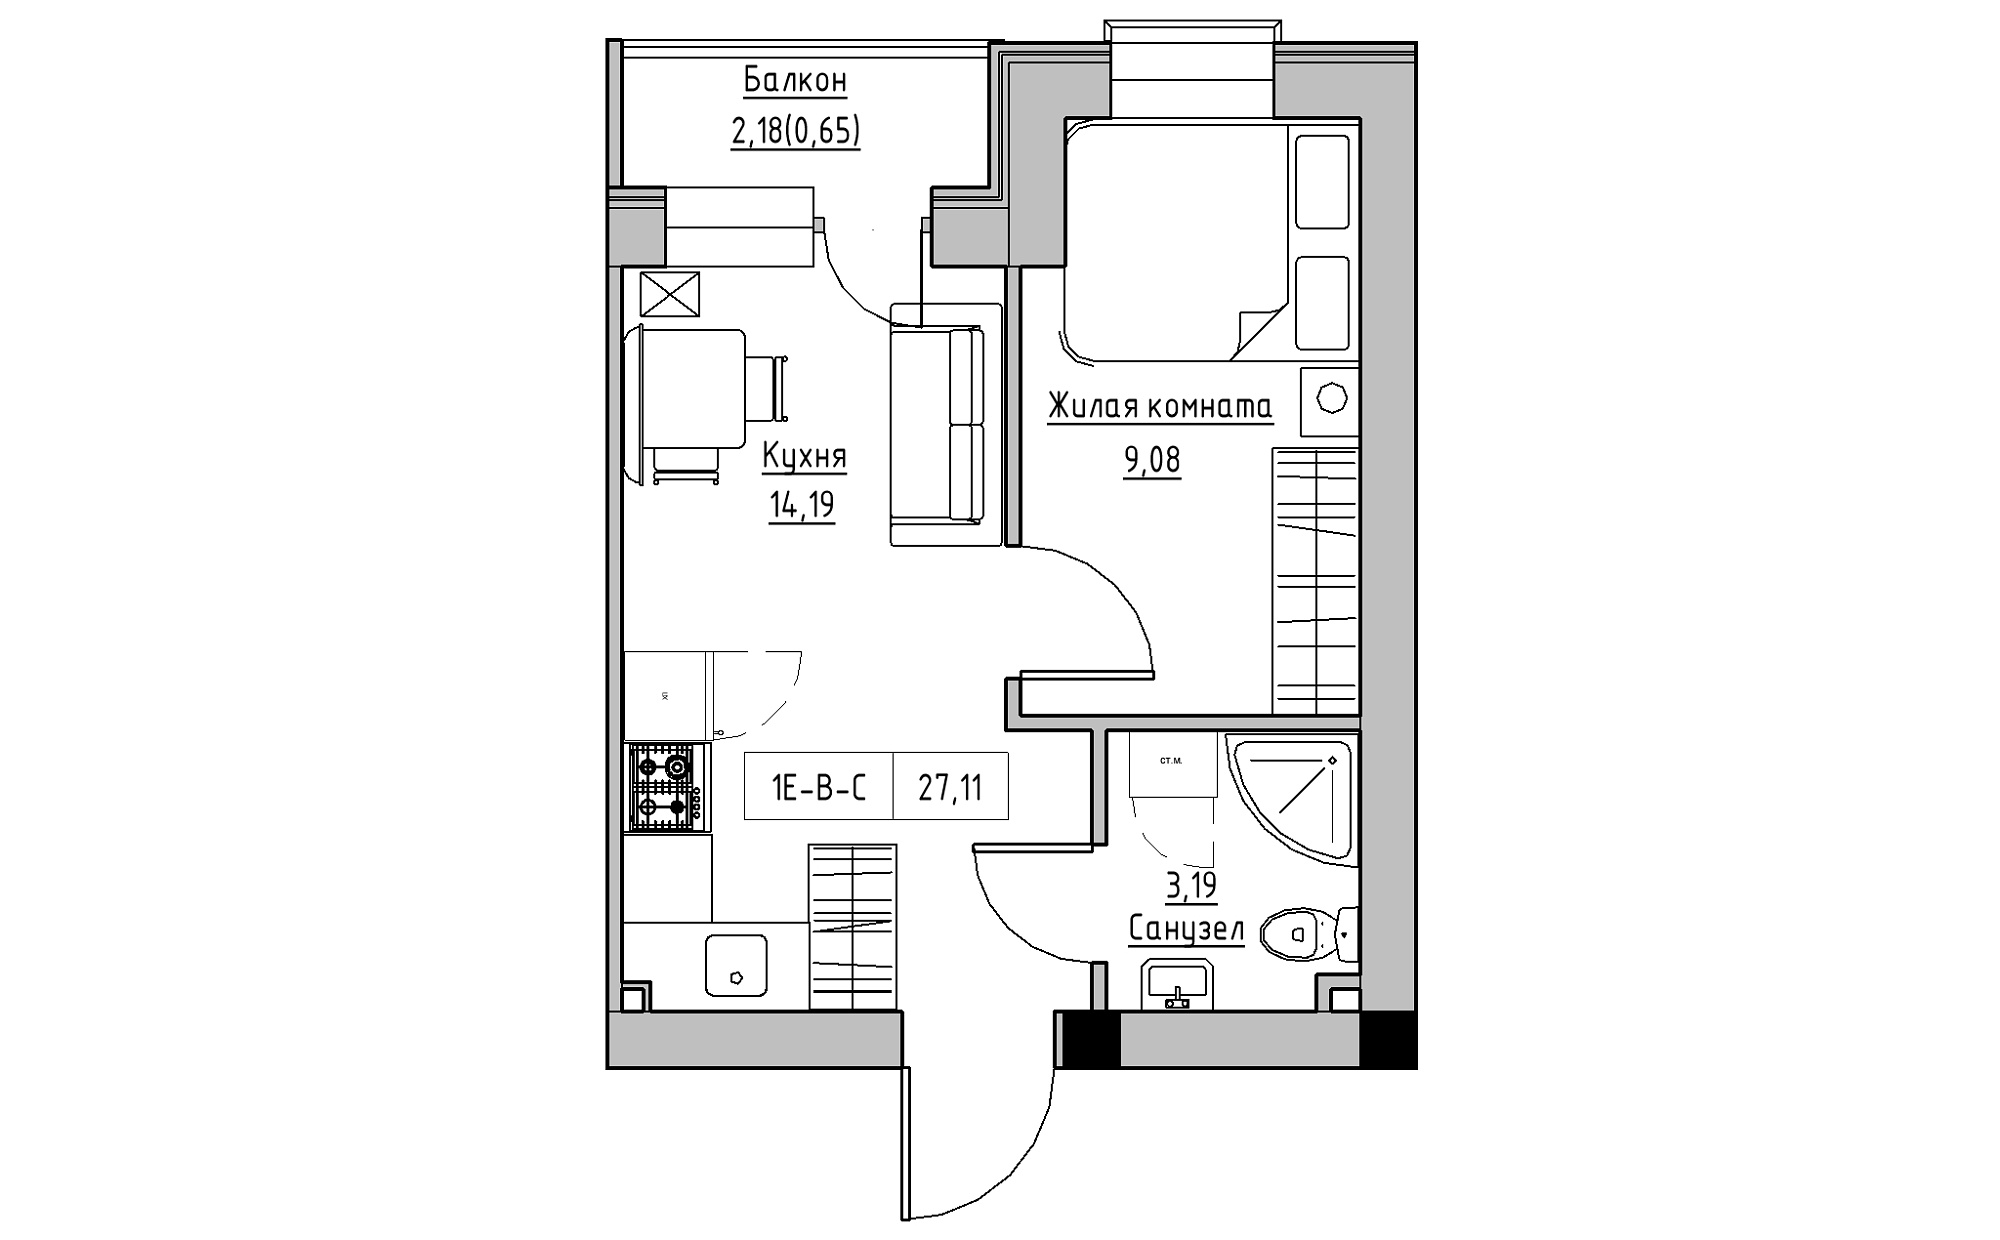 Planning 1-rm flats area 27.11m2, KS-022-05/0008.